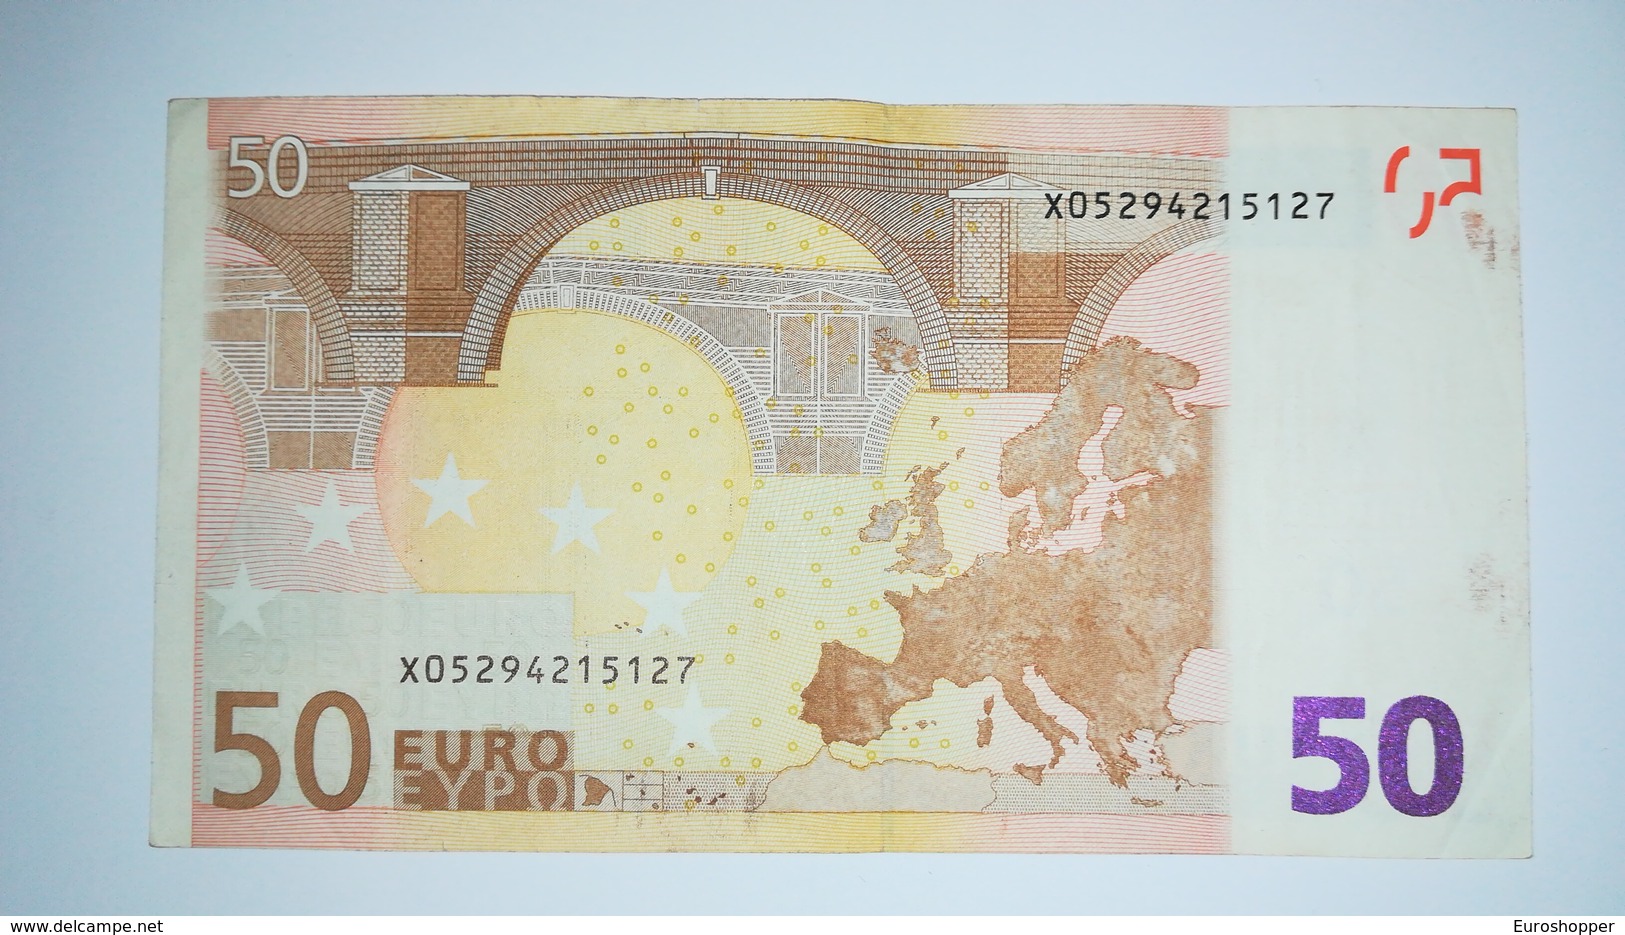 EURO-GERMANY 50 EURO (X) R006 Sign DUISENBERG - 50 Euro